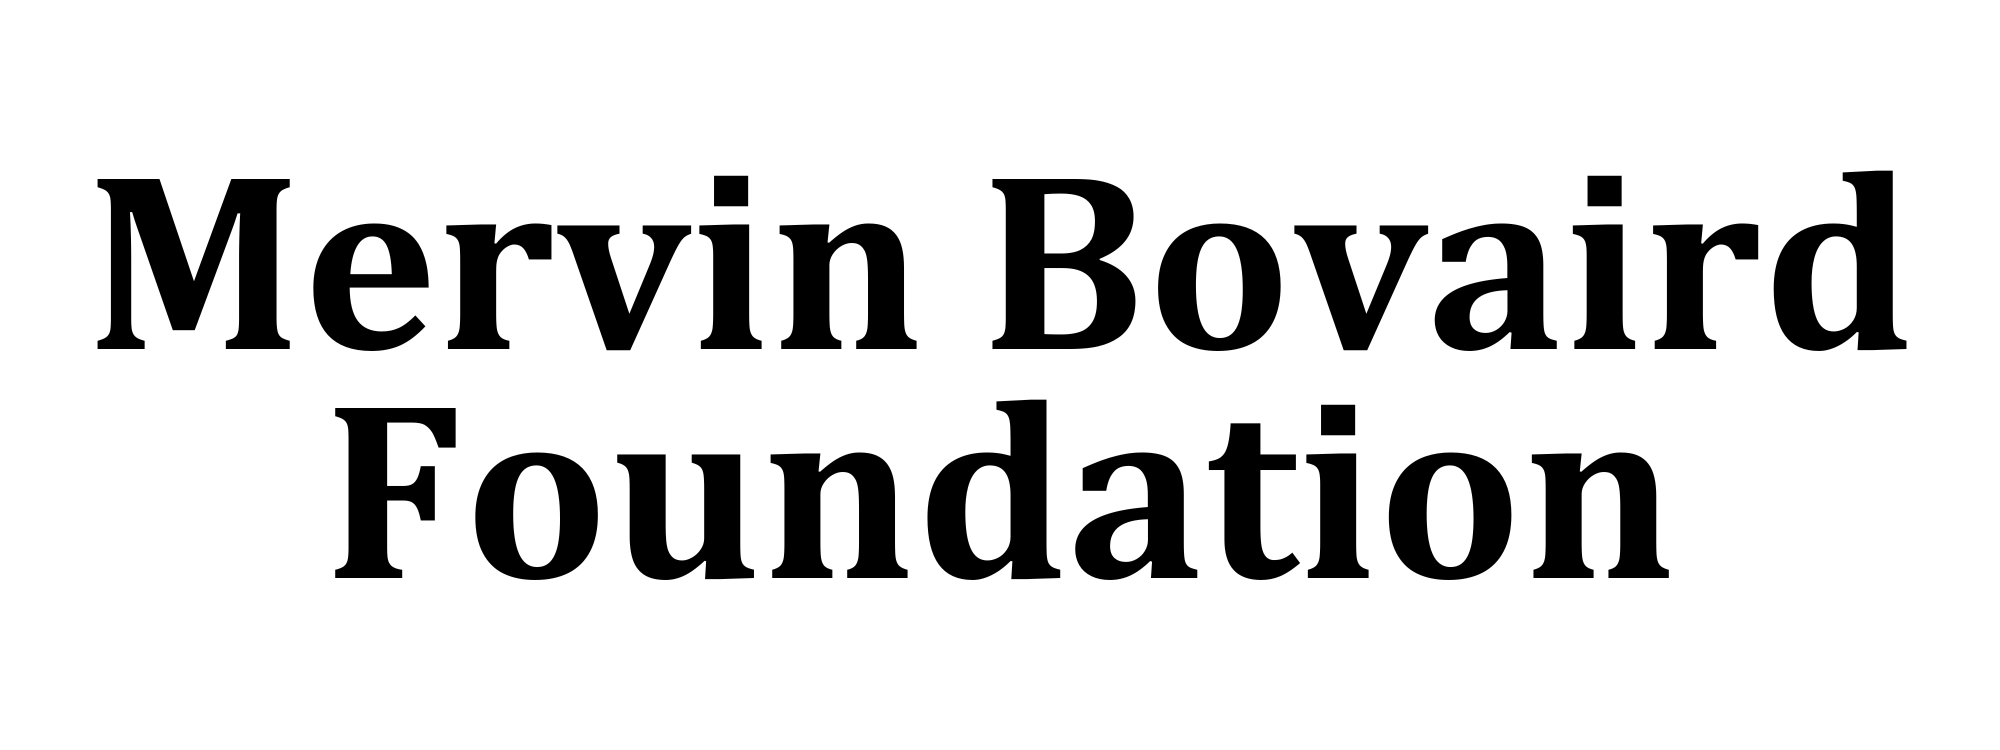 Mervin Bovaird Foundation logo.png